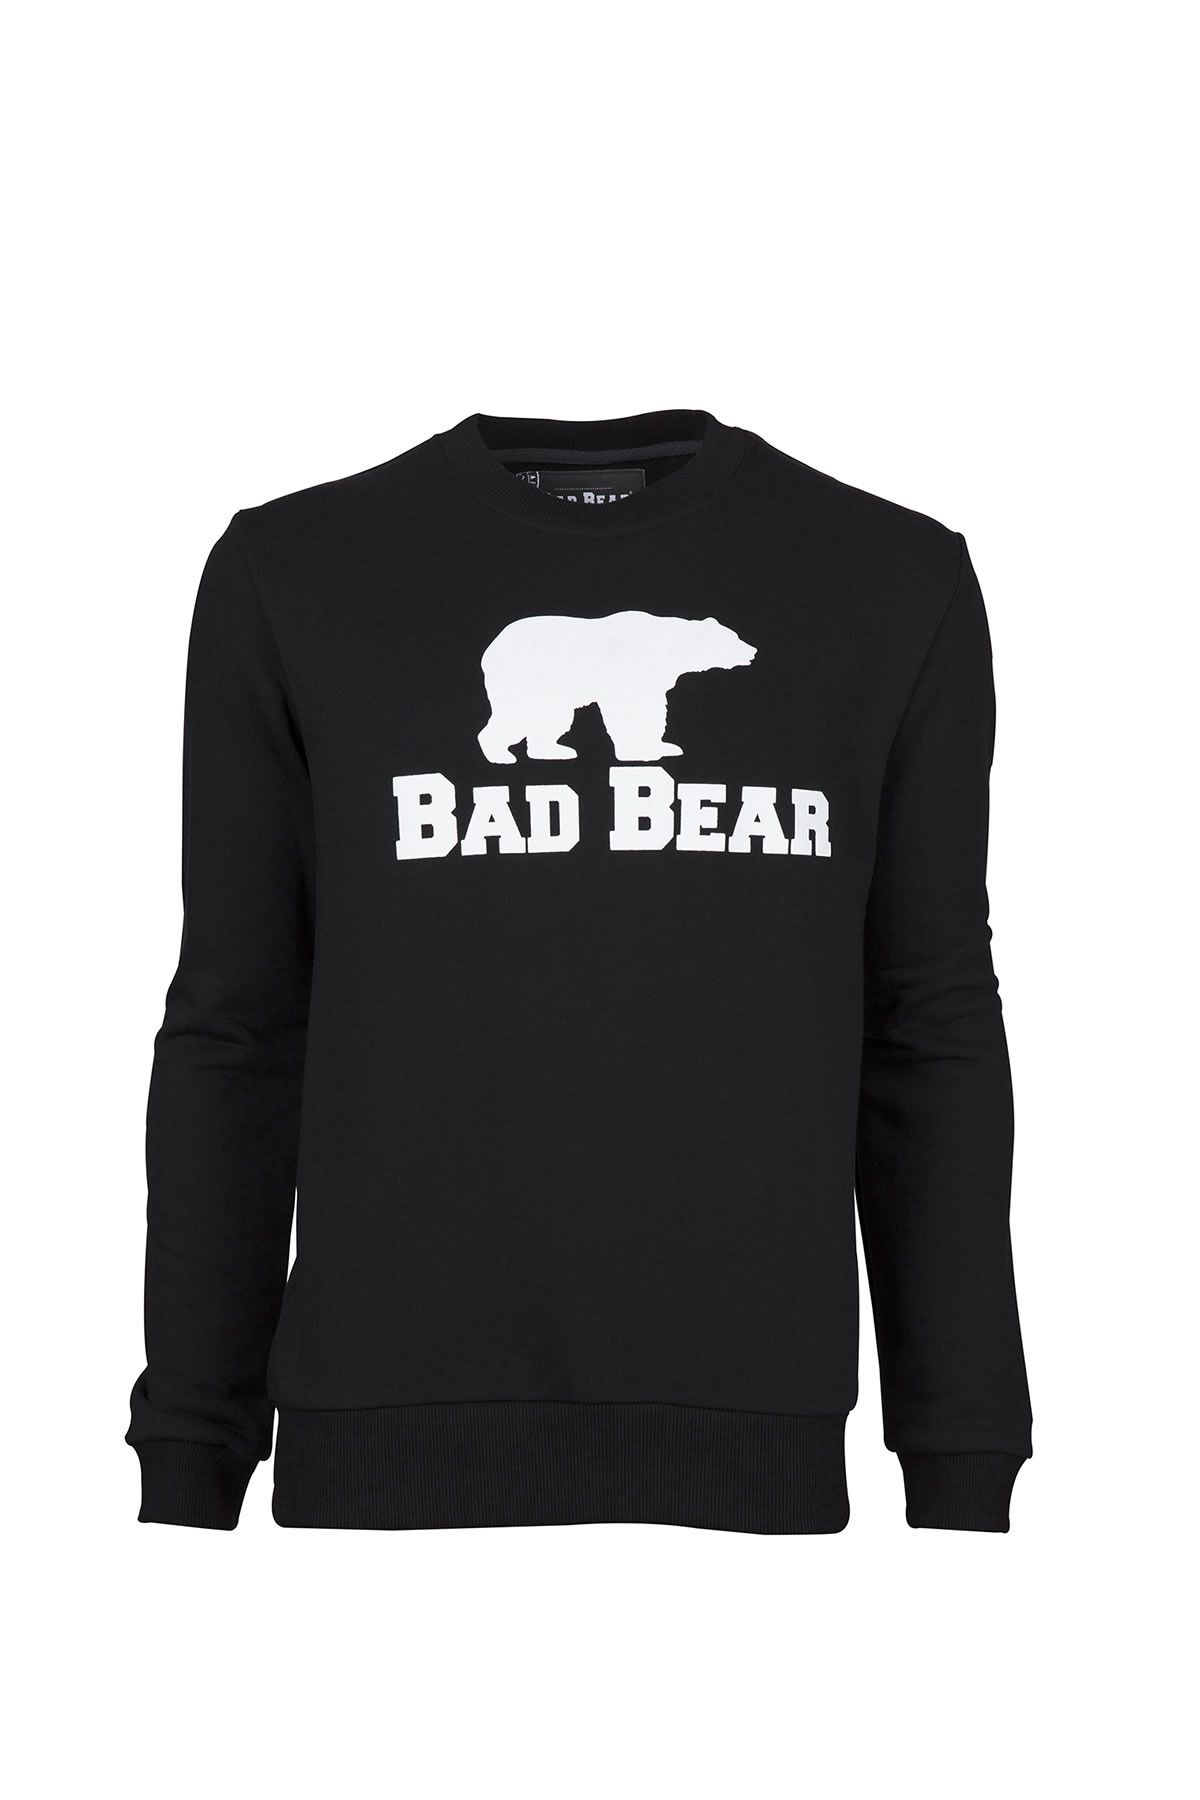 Bad Bear Bad Bear Crewneck Erkek Sweatshirt 20.02.12.011-c27